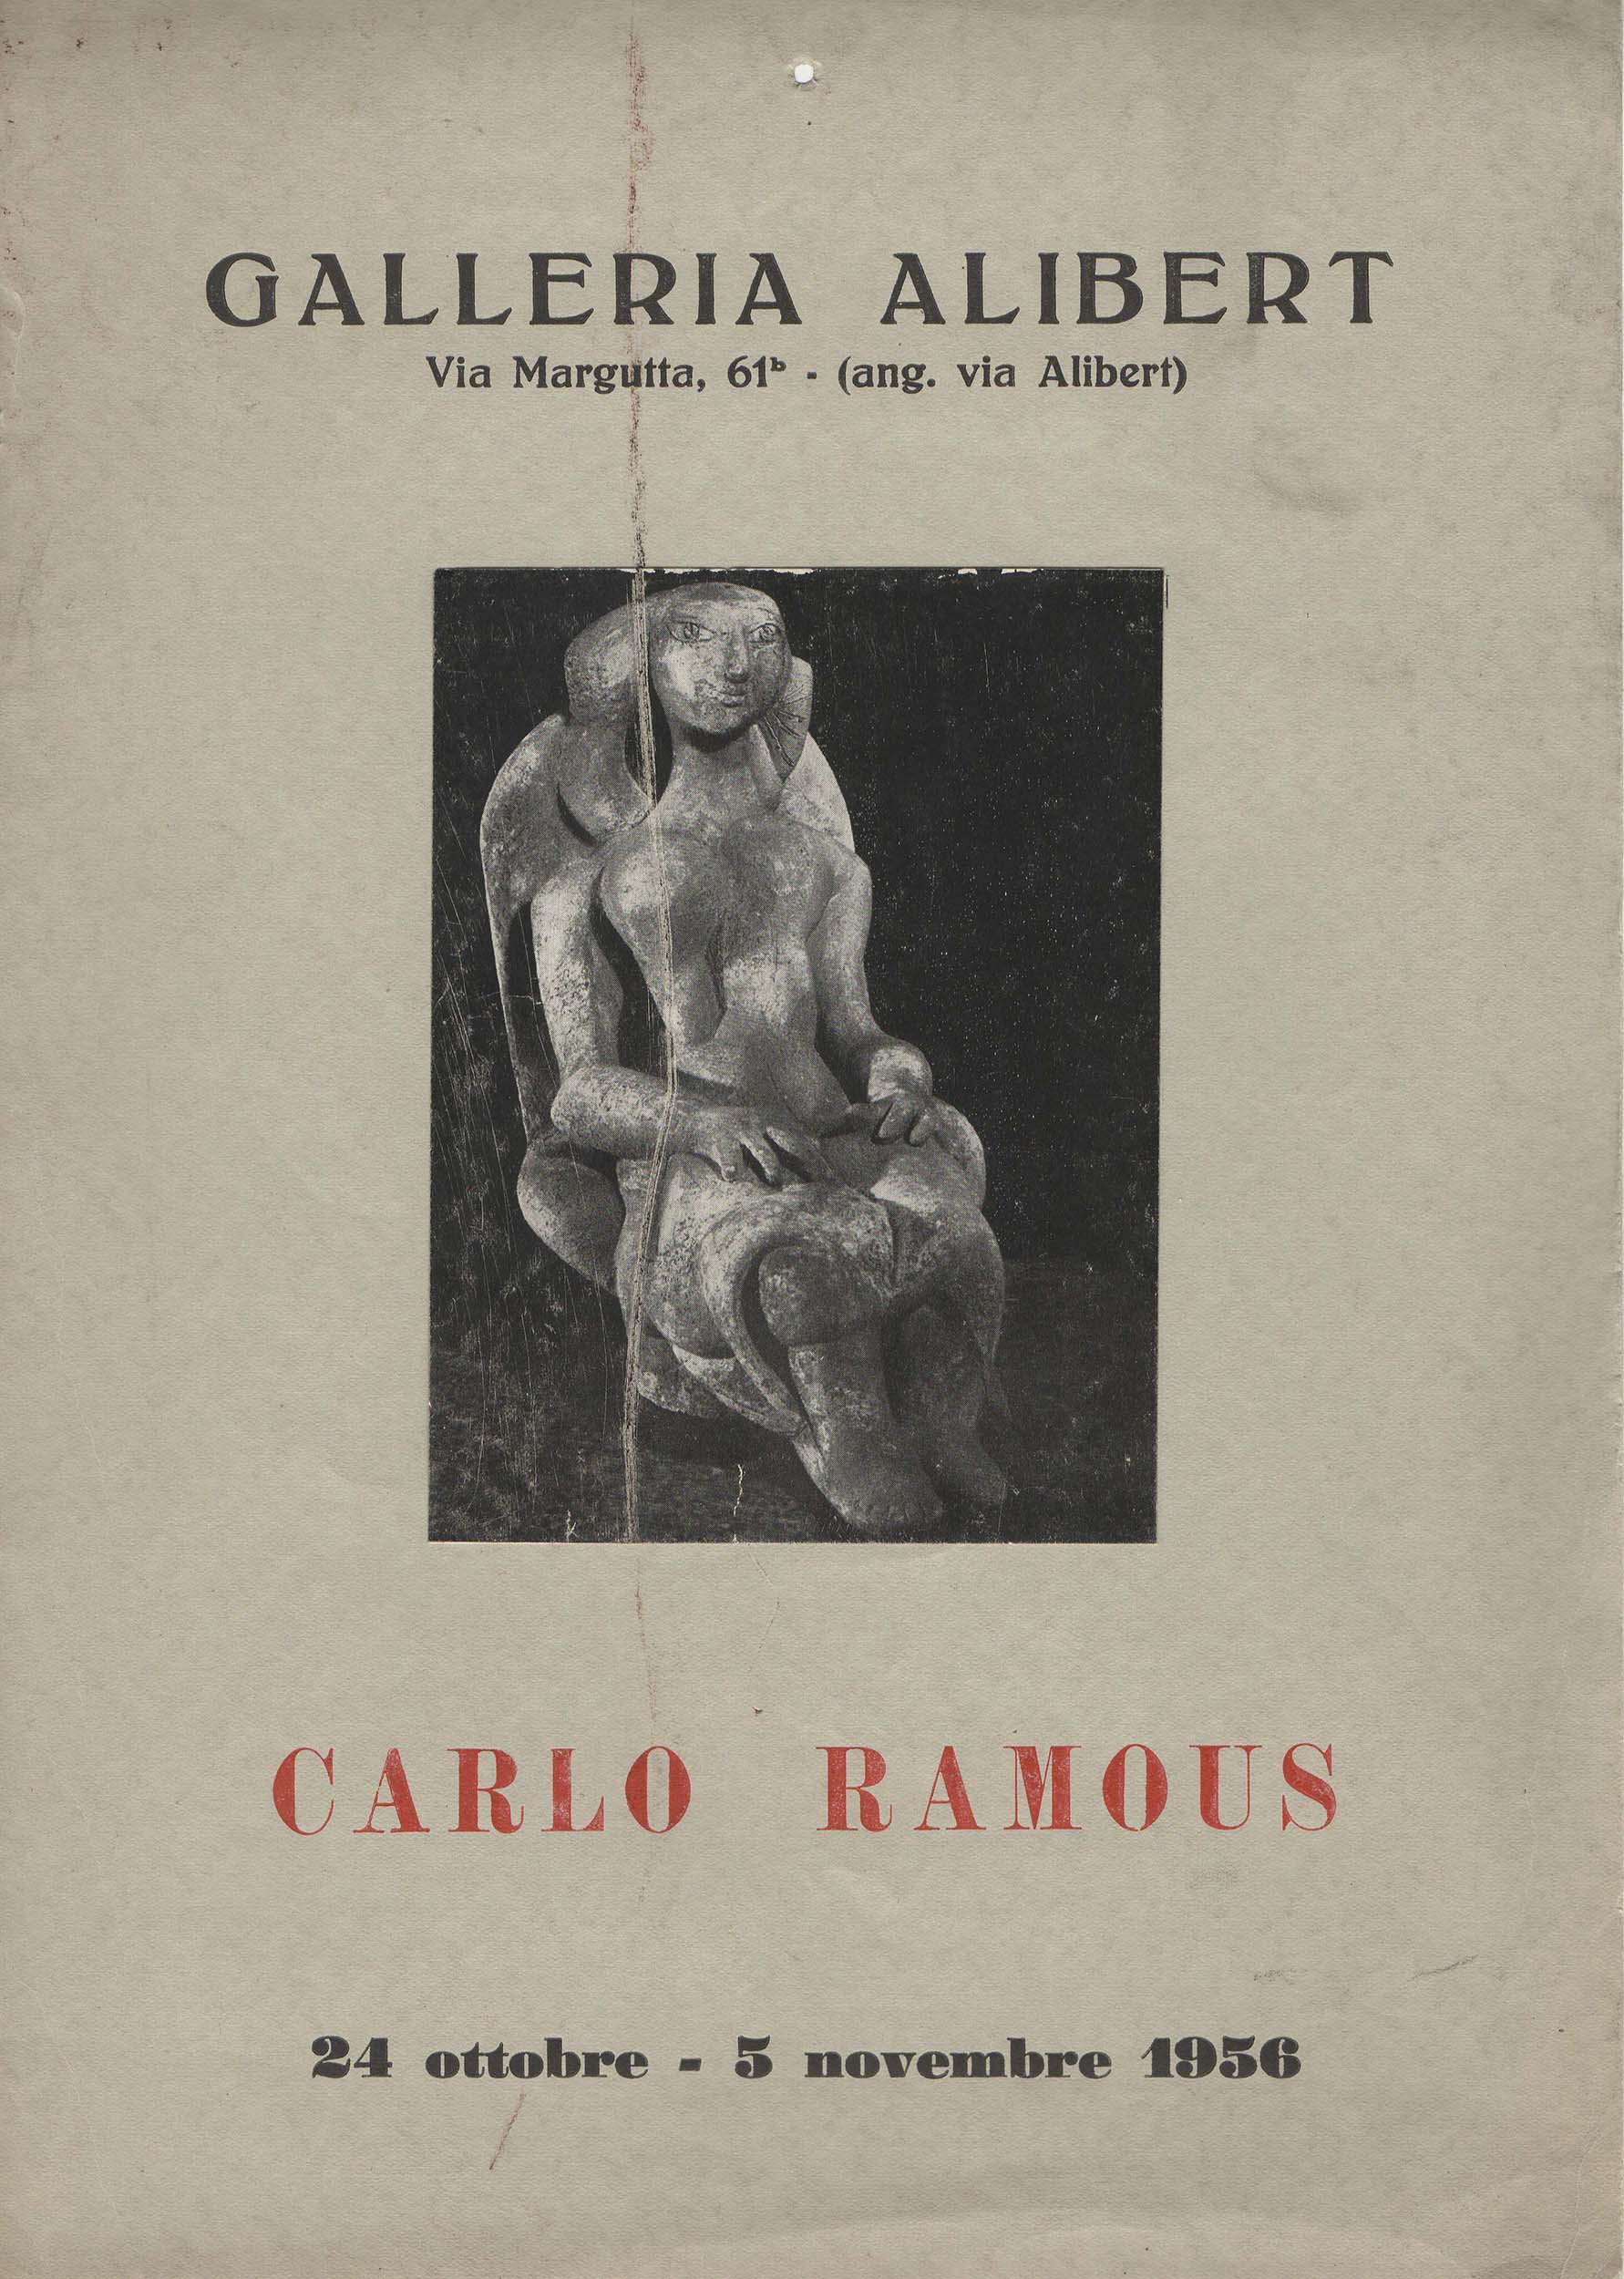 1956 – Galleria Alibert – Carlo Ramous